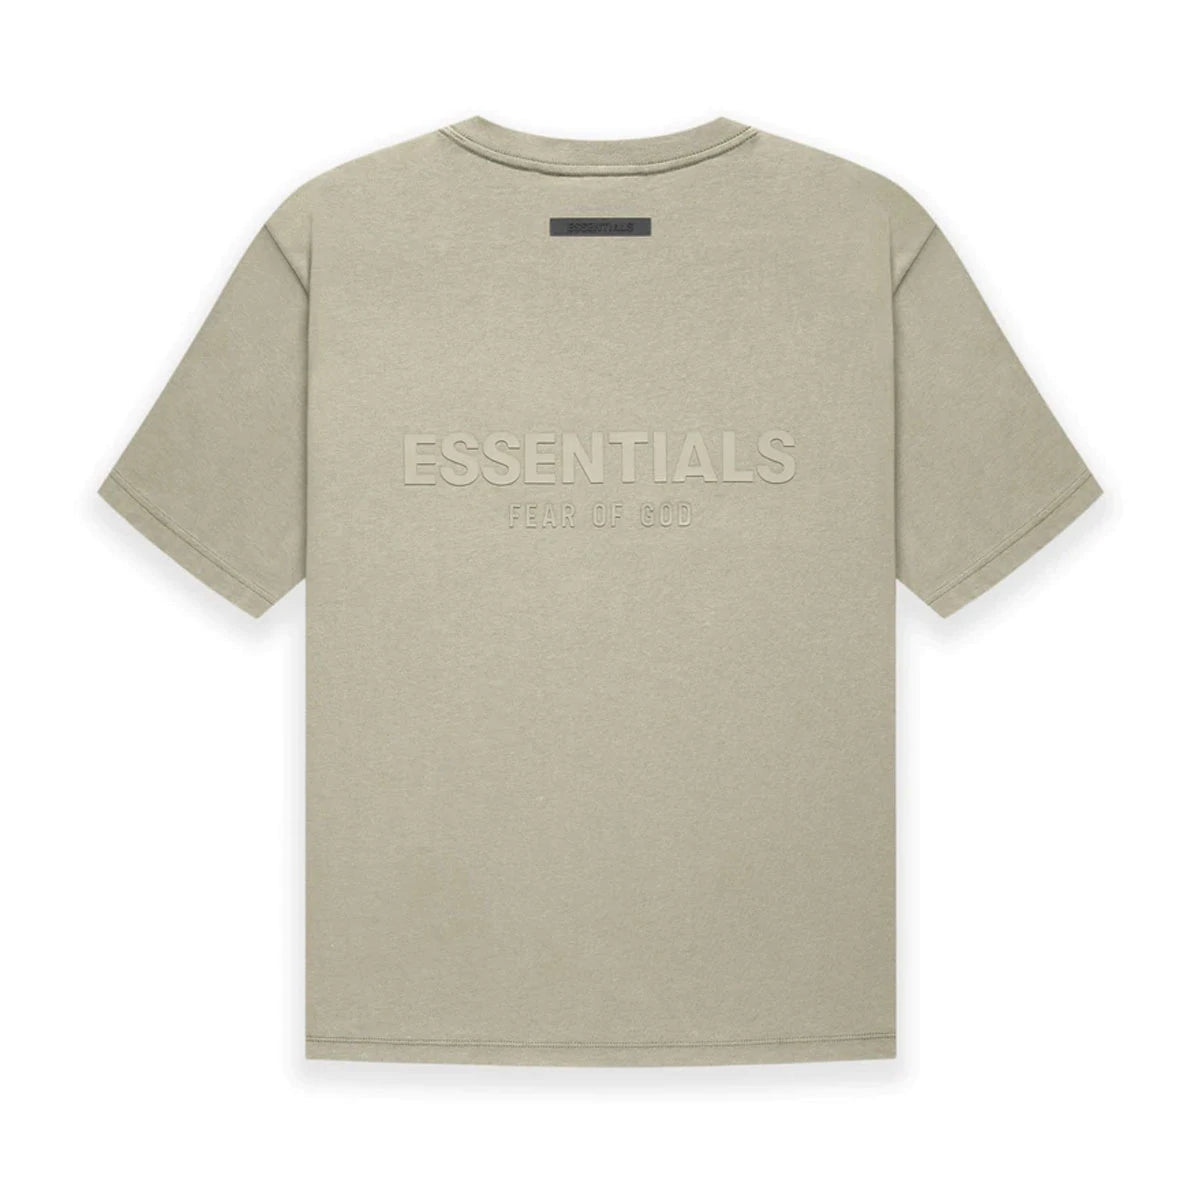 Fear of God Essentials T-Shirt - Pistachio (SS22)